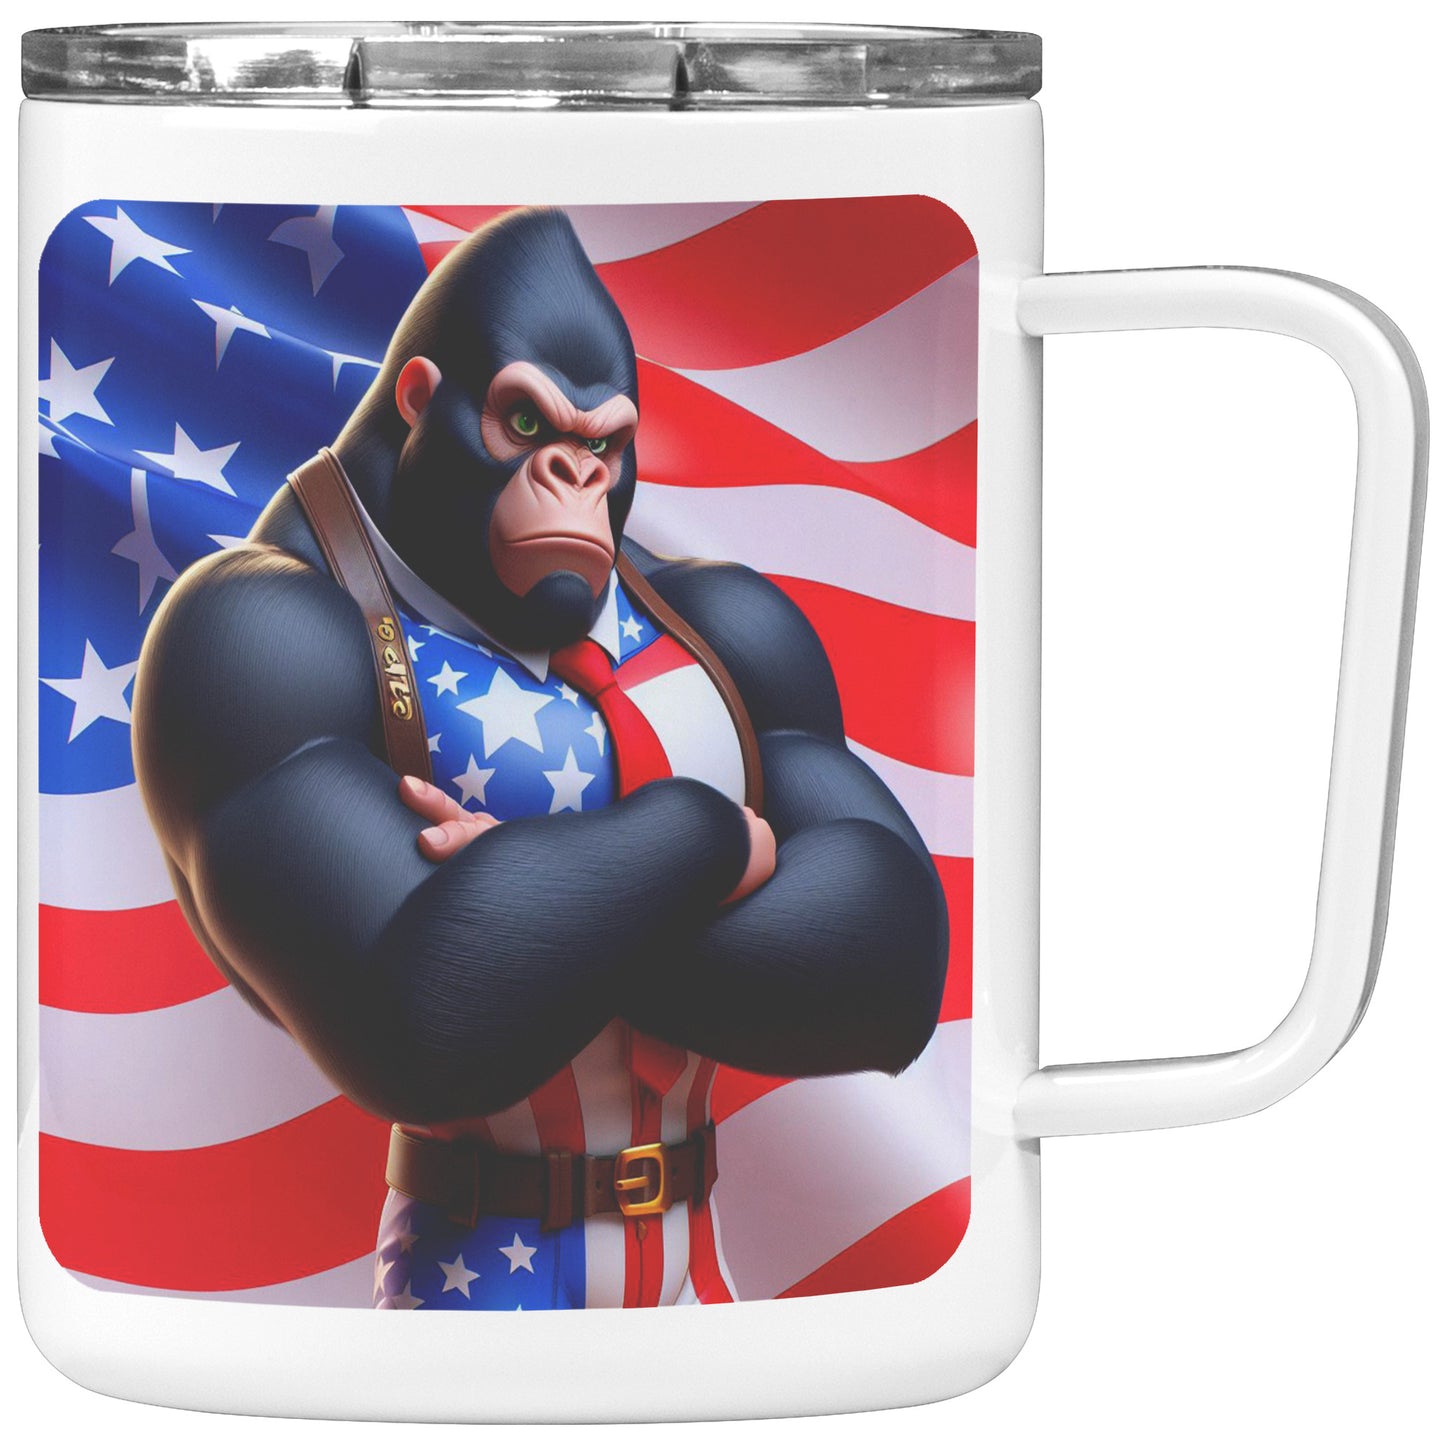 Grumpy Gorilla - Insulated Coffee Mug #3